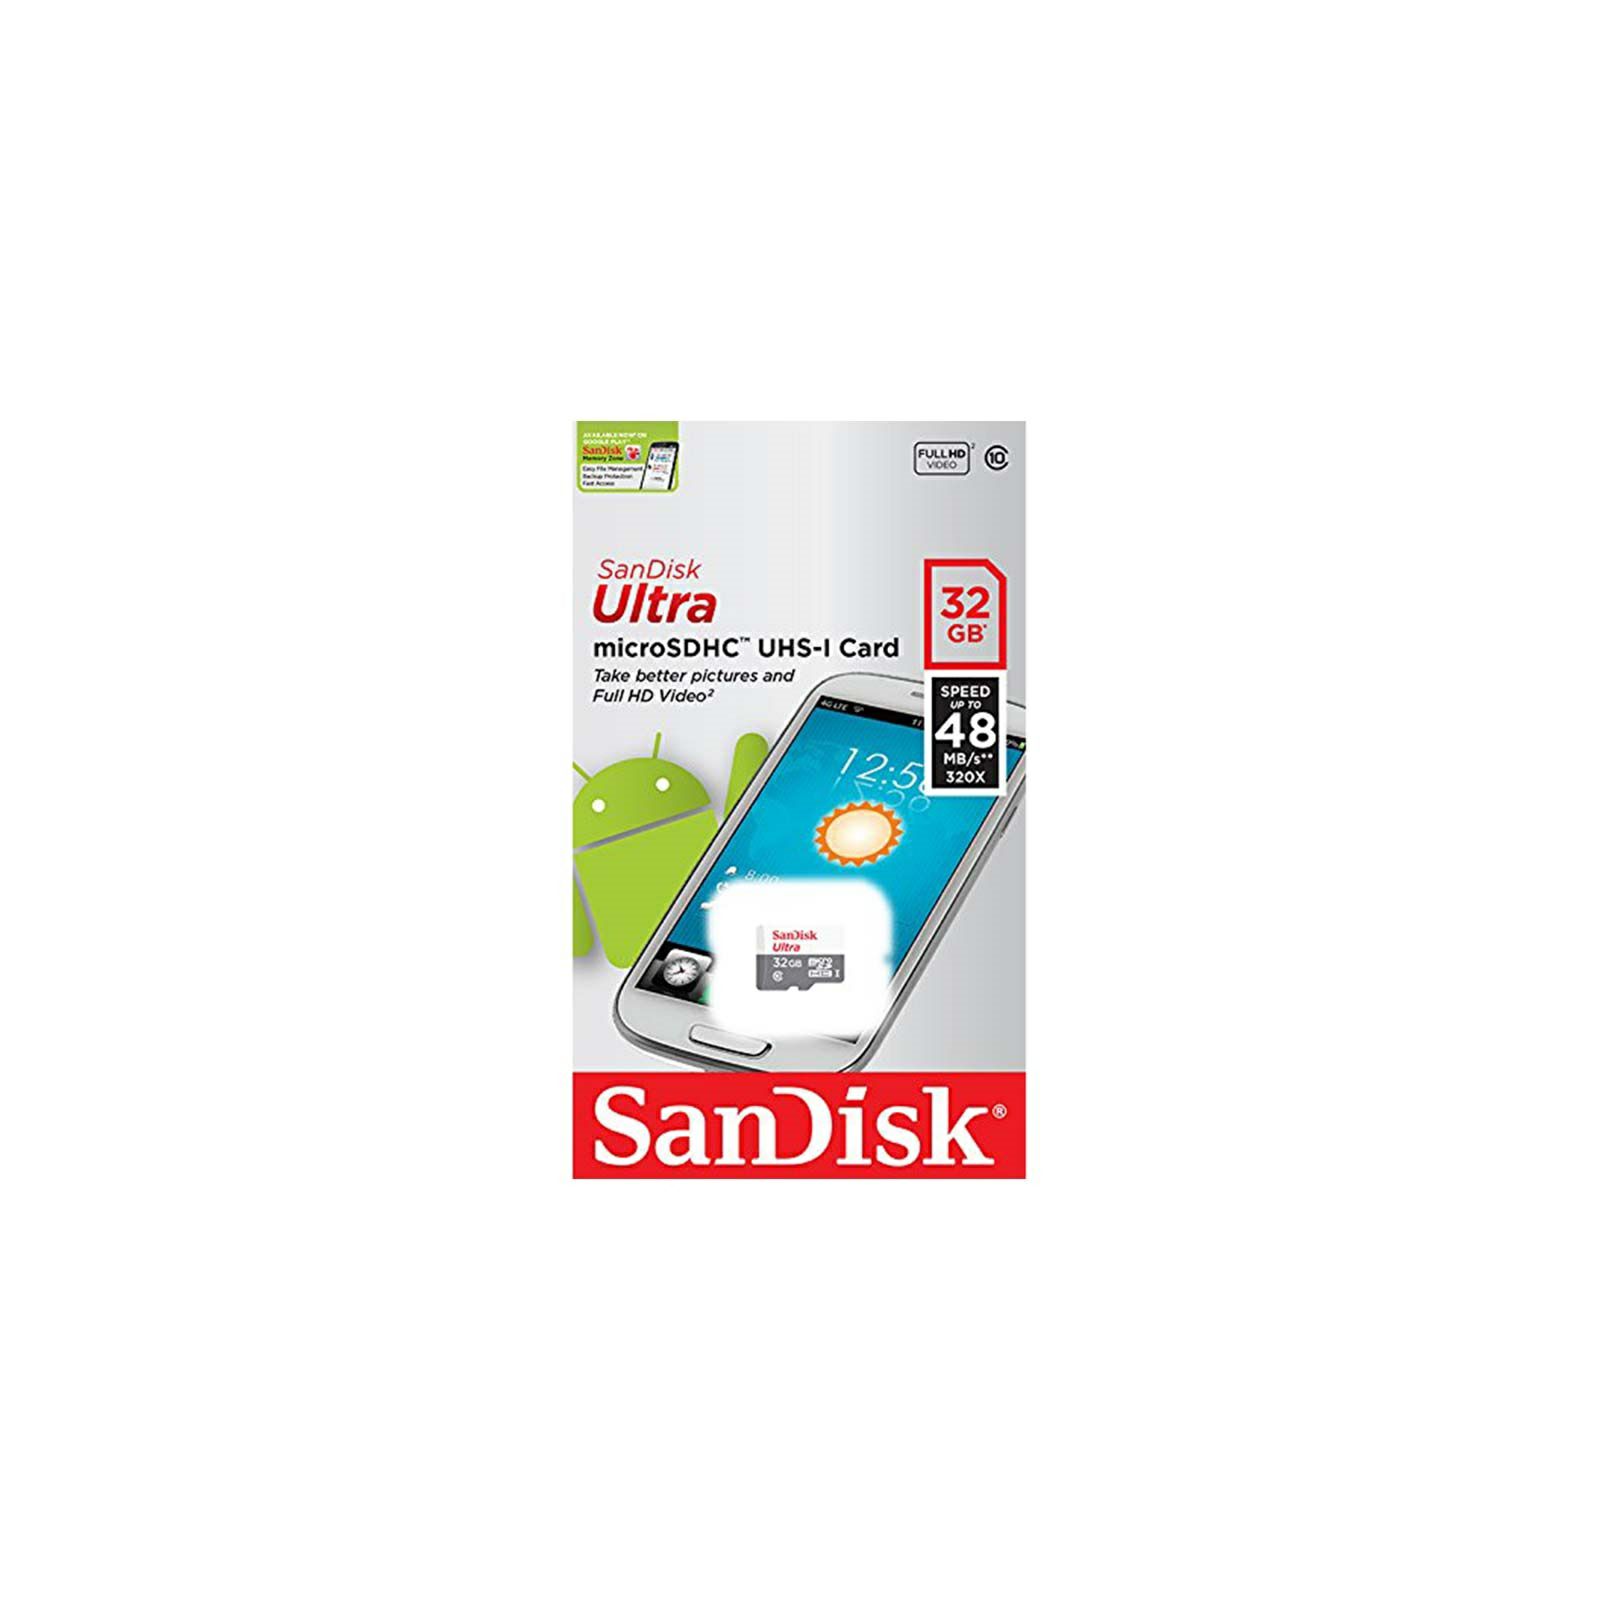 SanDisk Ultra Android microSDHC 32GB 48MB/s Class 10 UHS-I SDSQUNB-032G-GN3MN Memorijska kartica